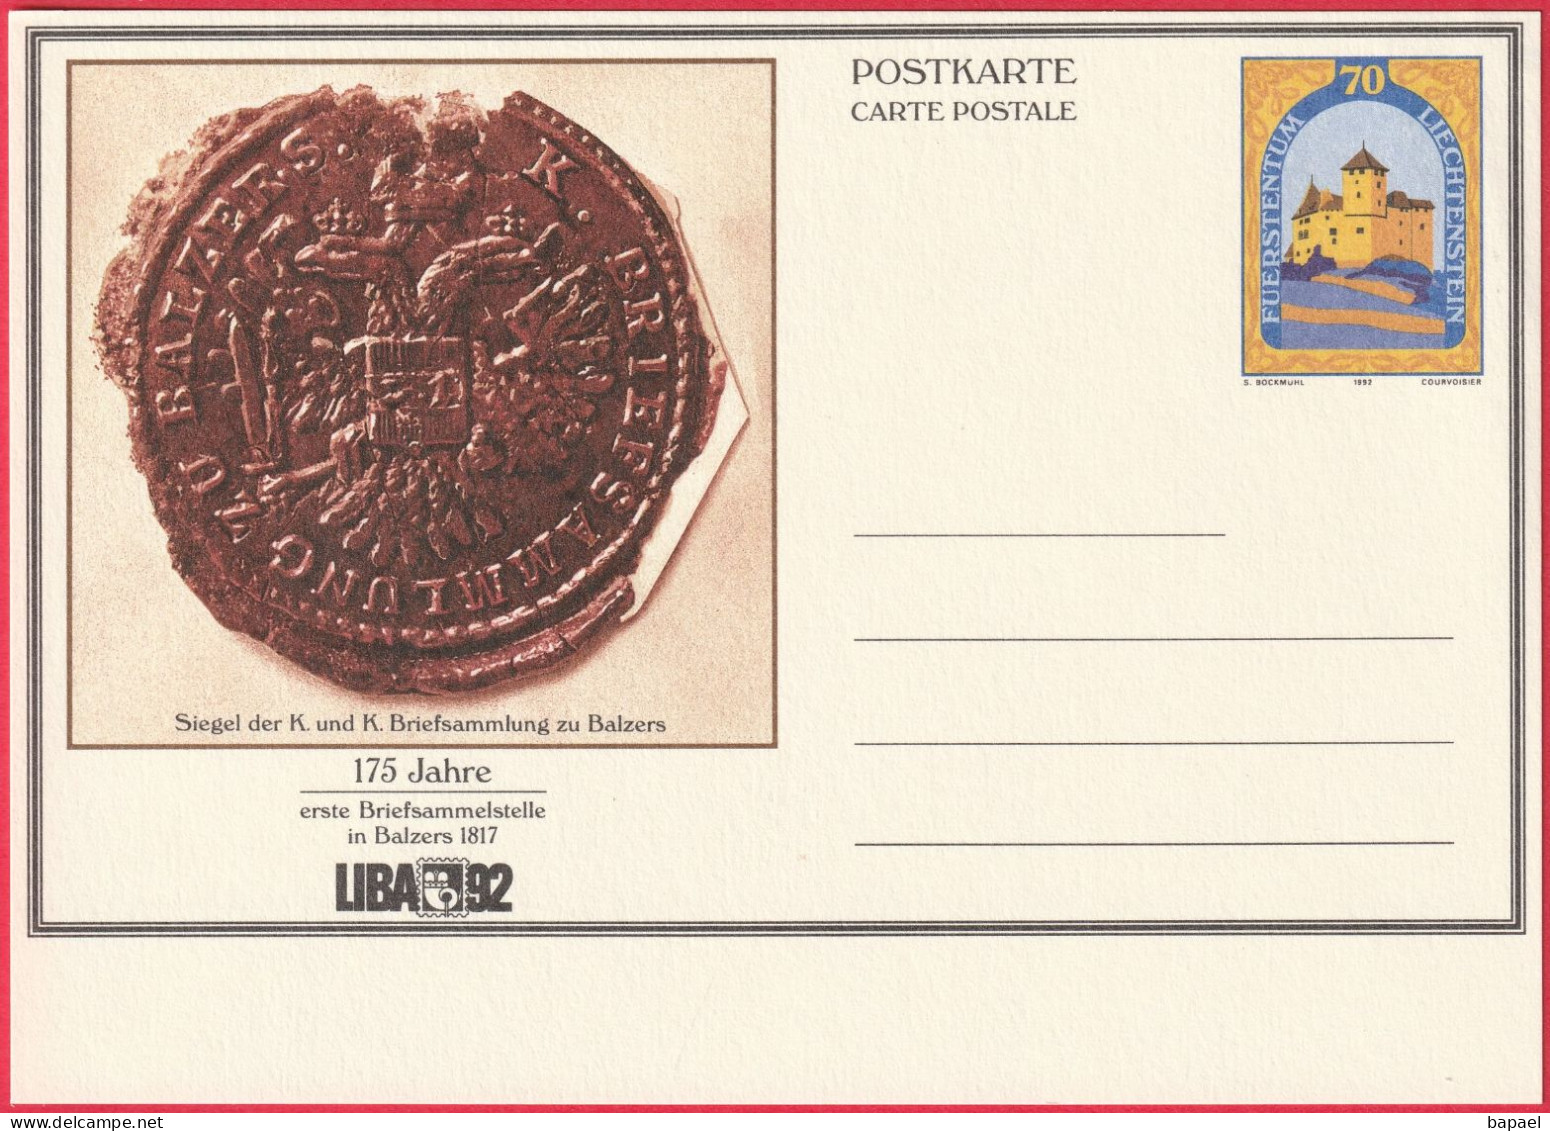 Entier Postal (CP) - Balzers (Liechtenstein) (1992) - Sceau Du Recueil De Lettres K. Et K. à Balzers - Ganzsachen